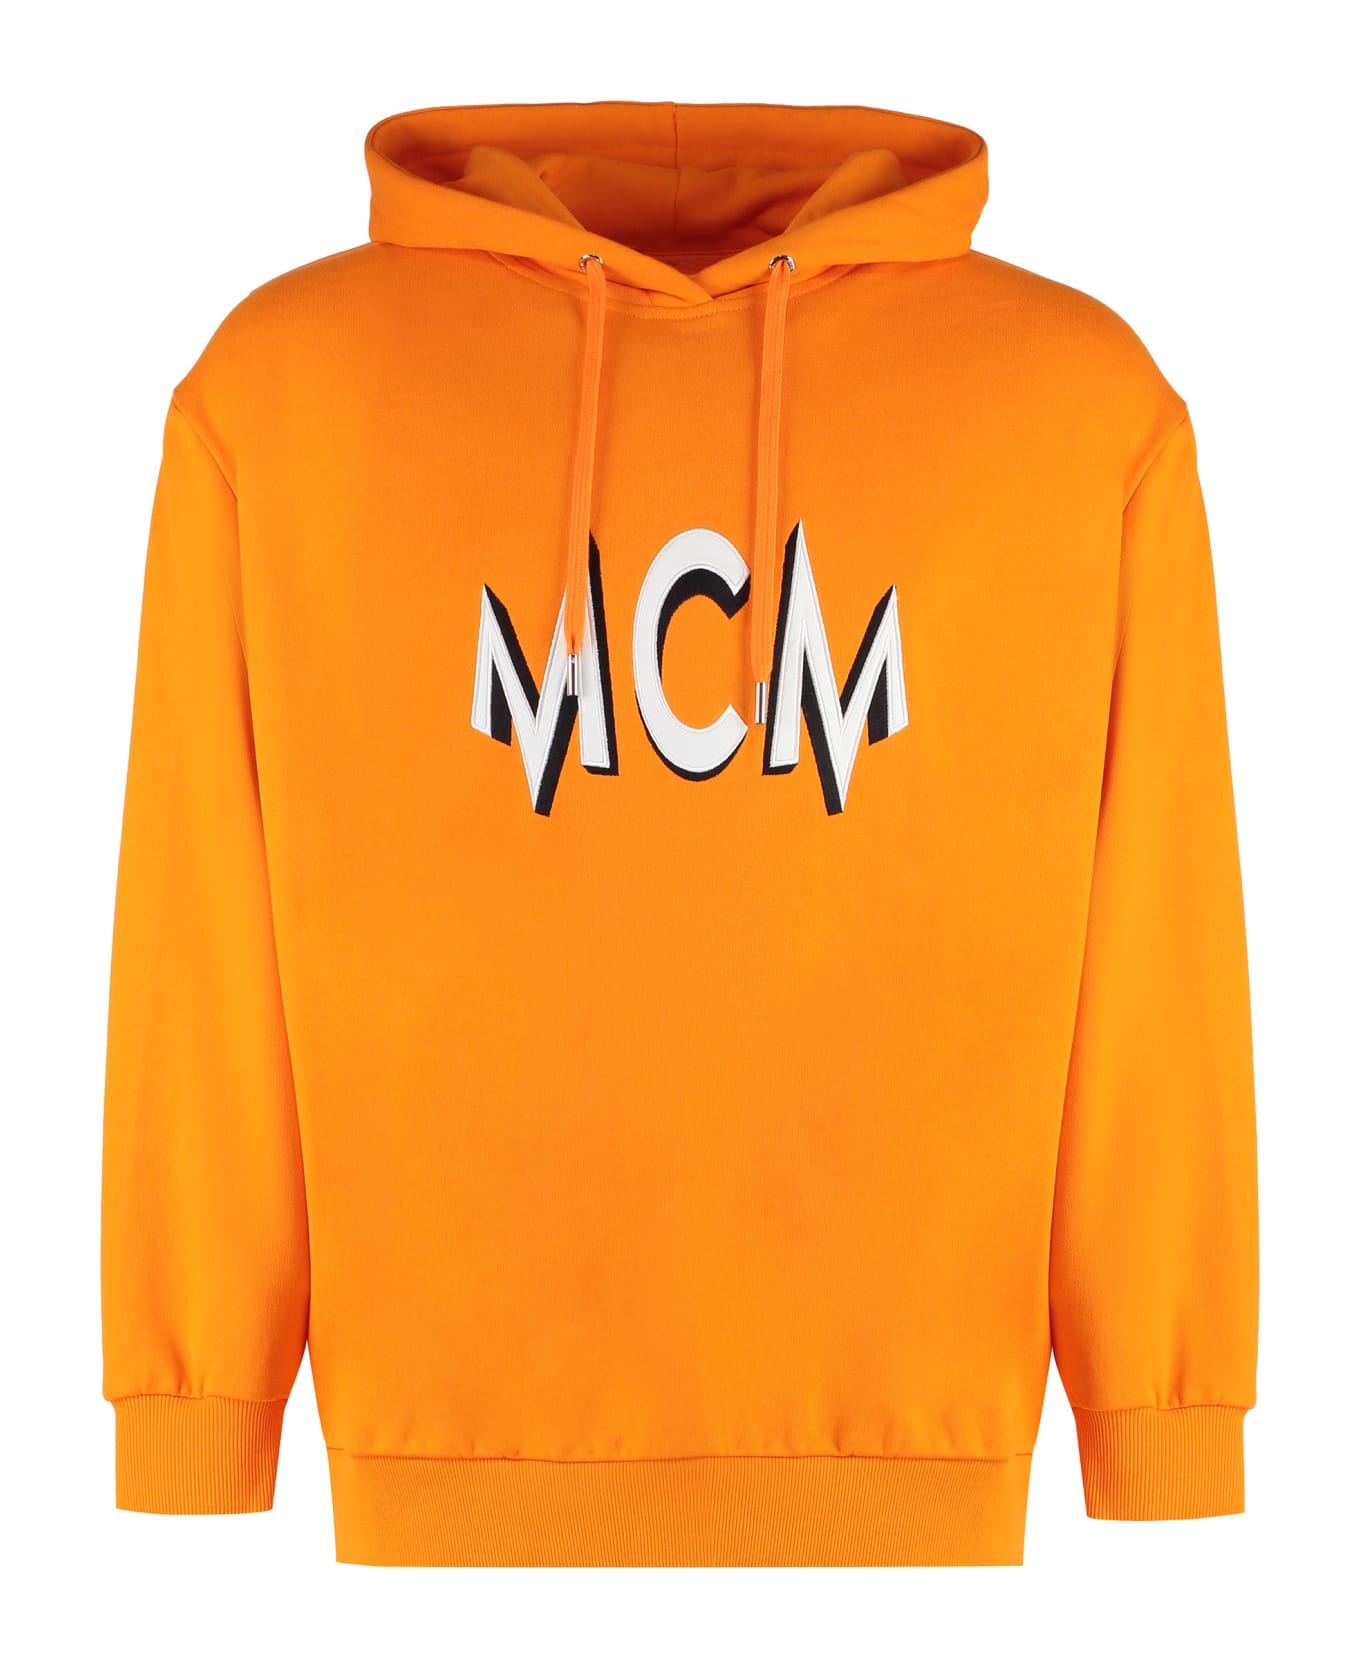 MCM Cotton Hoodie - Orange